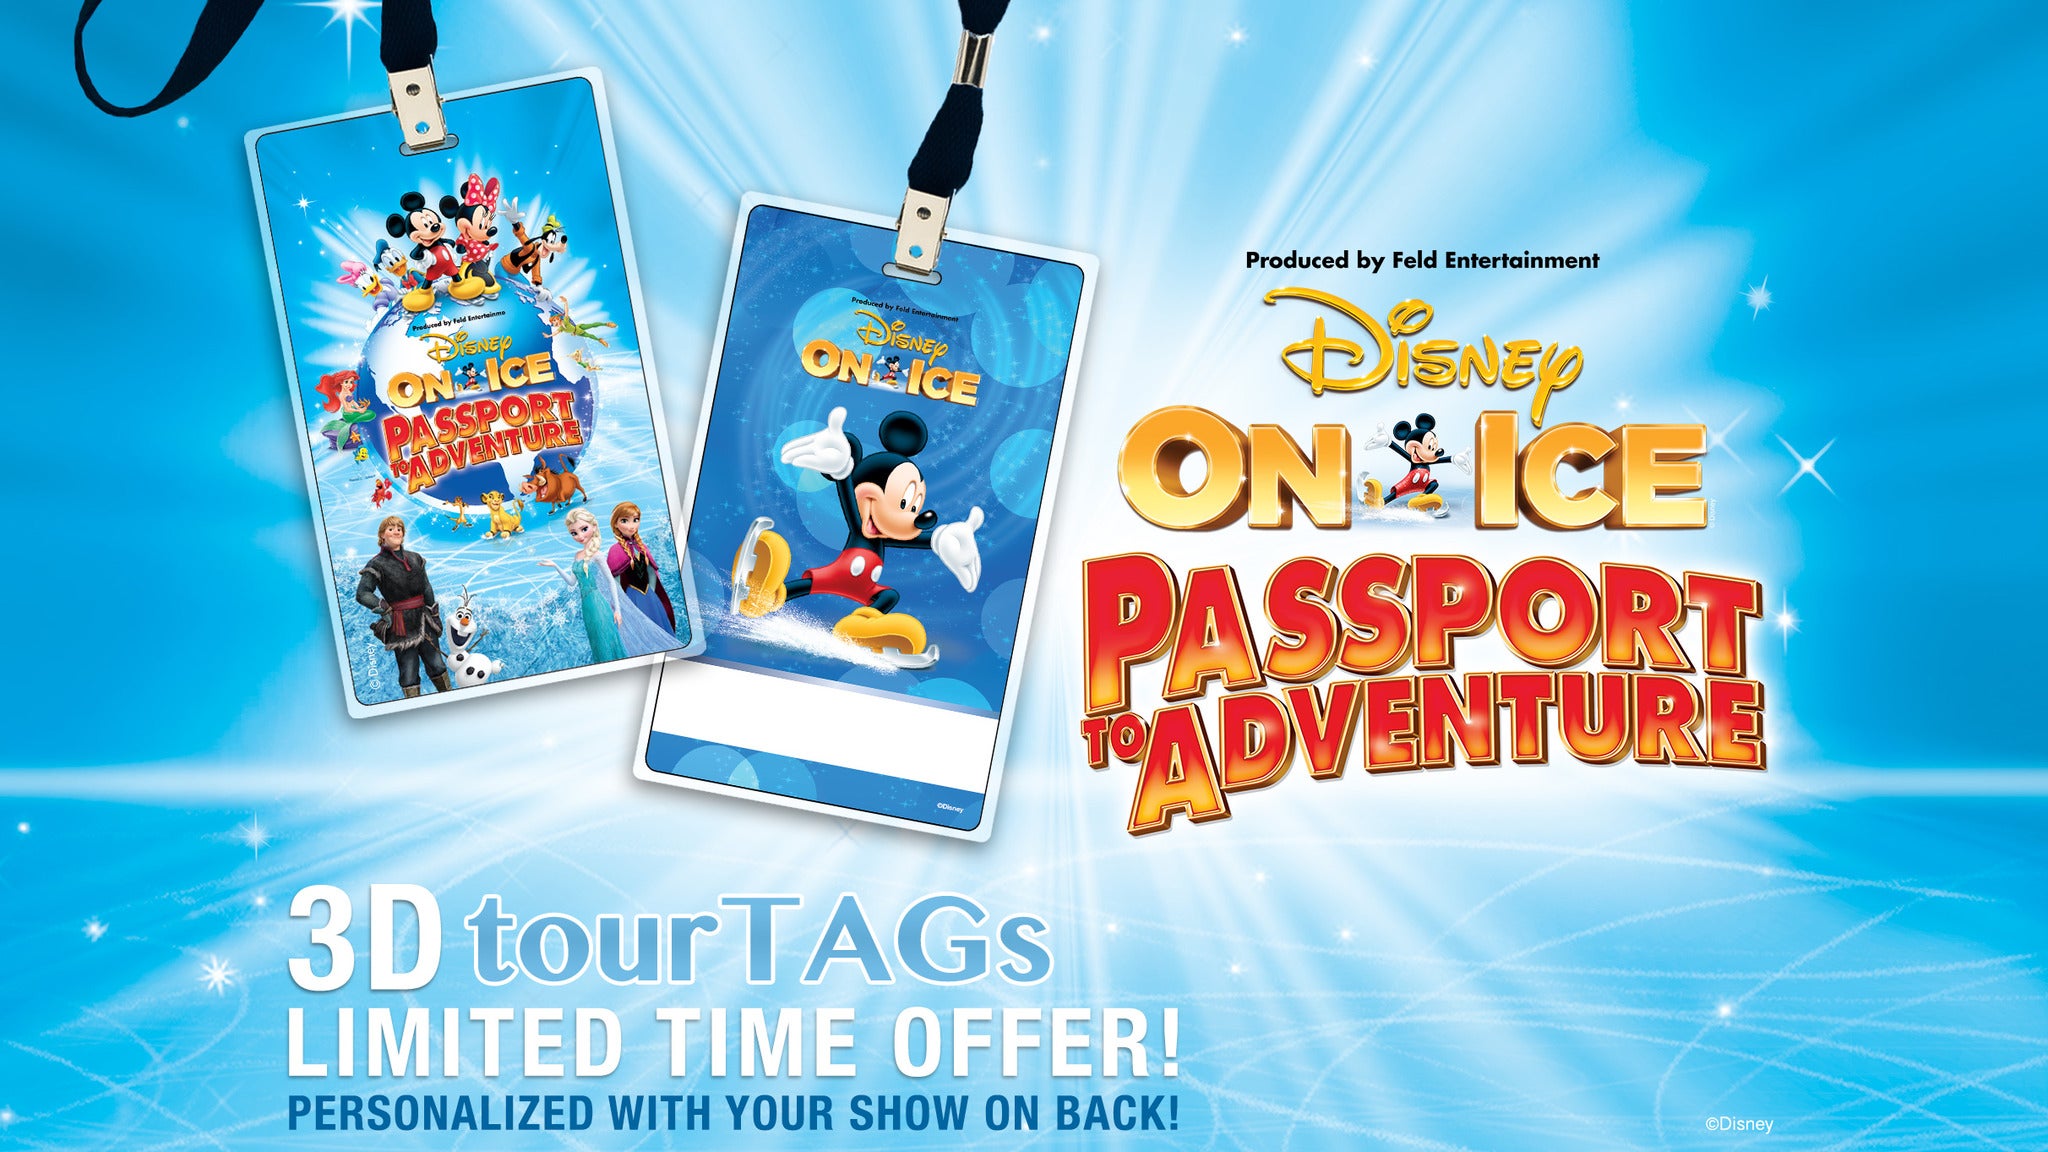 Disney On Ice presents Passport to Adventure Official tourTAGS